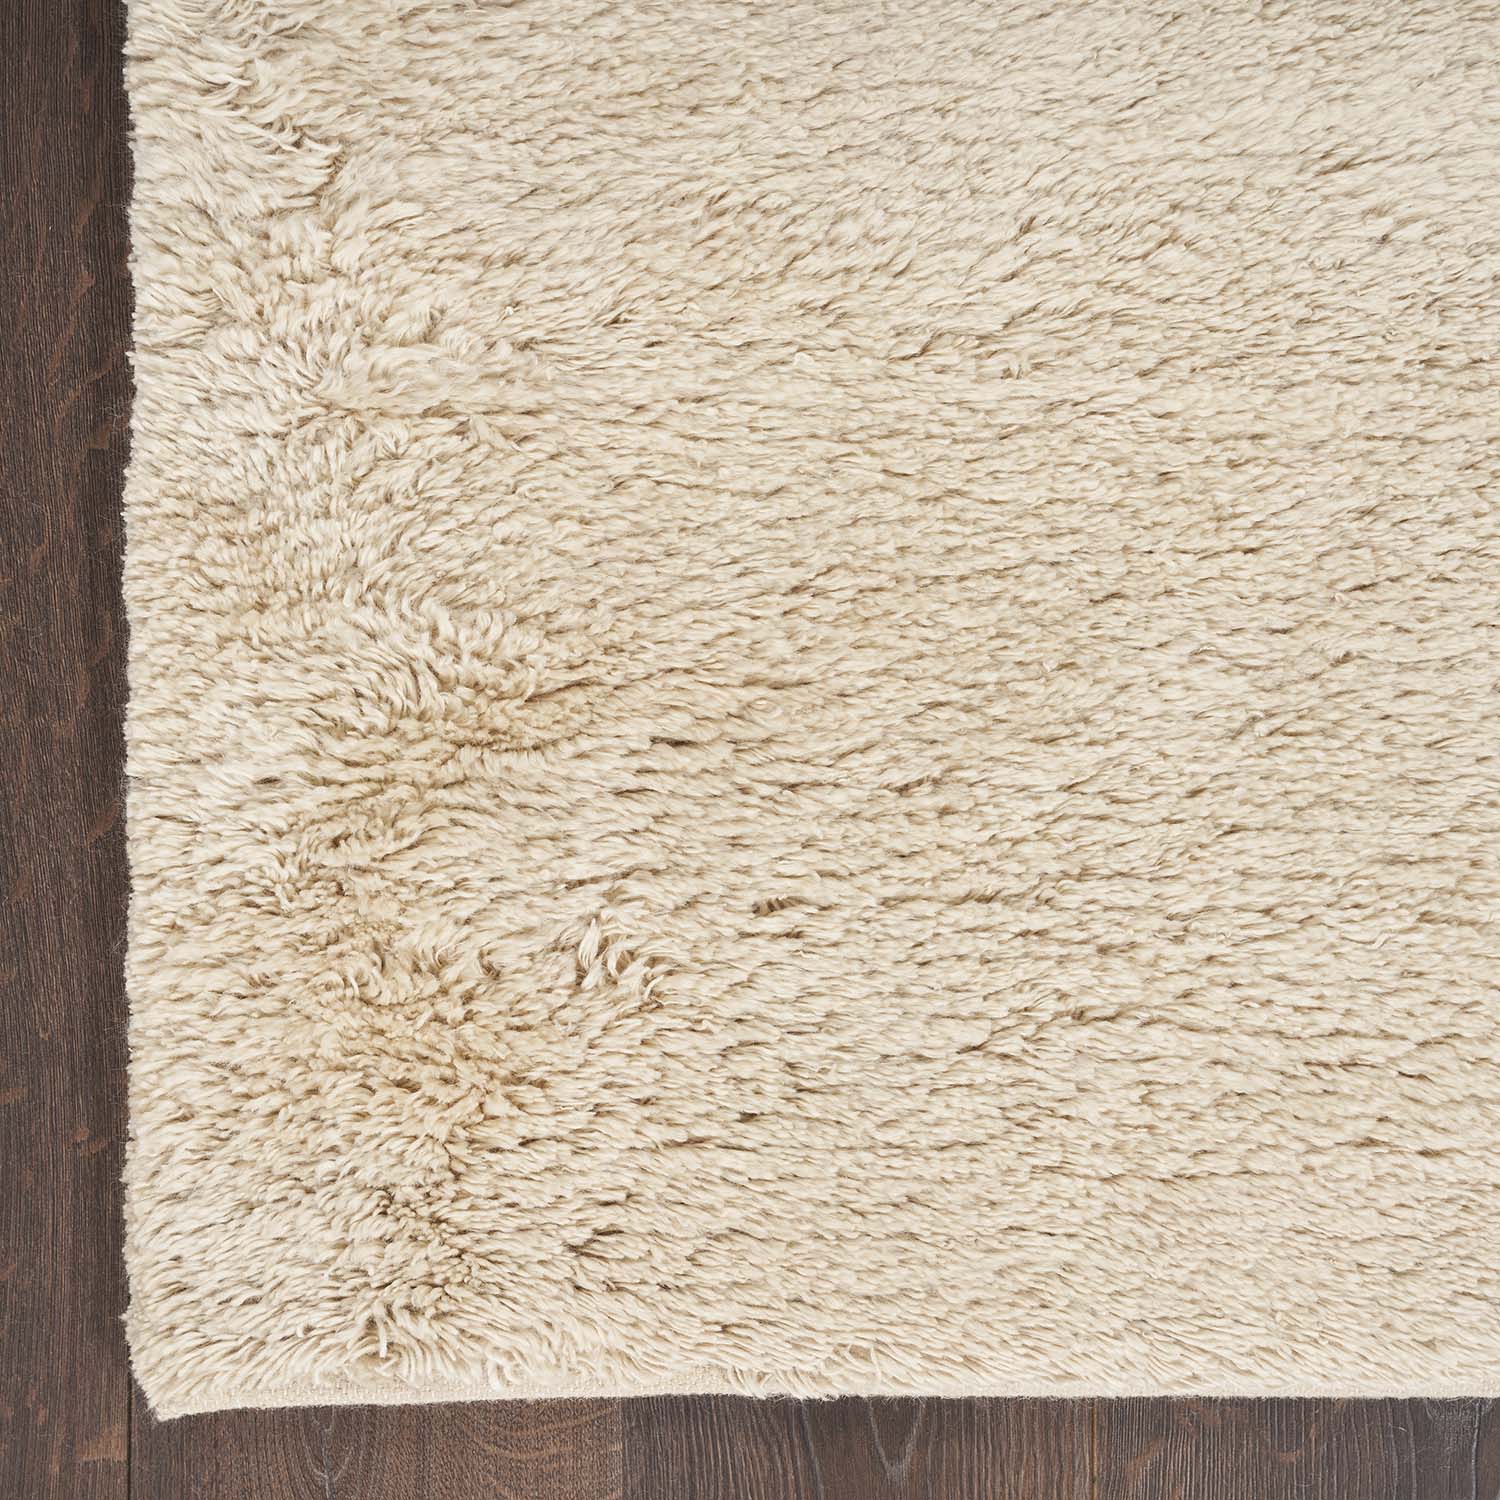 Light beige shaggy rug on dark wooden floor creates cozy ambiance.